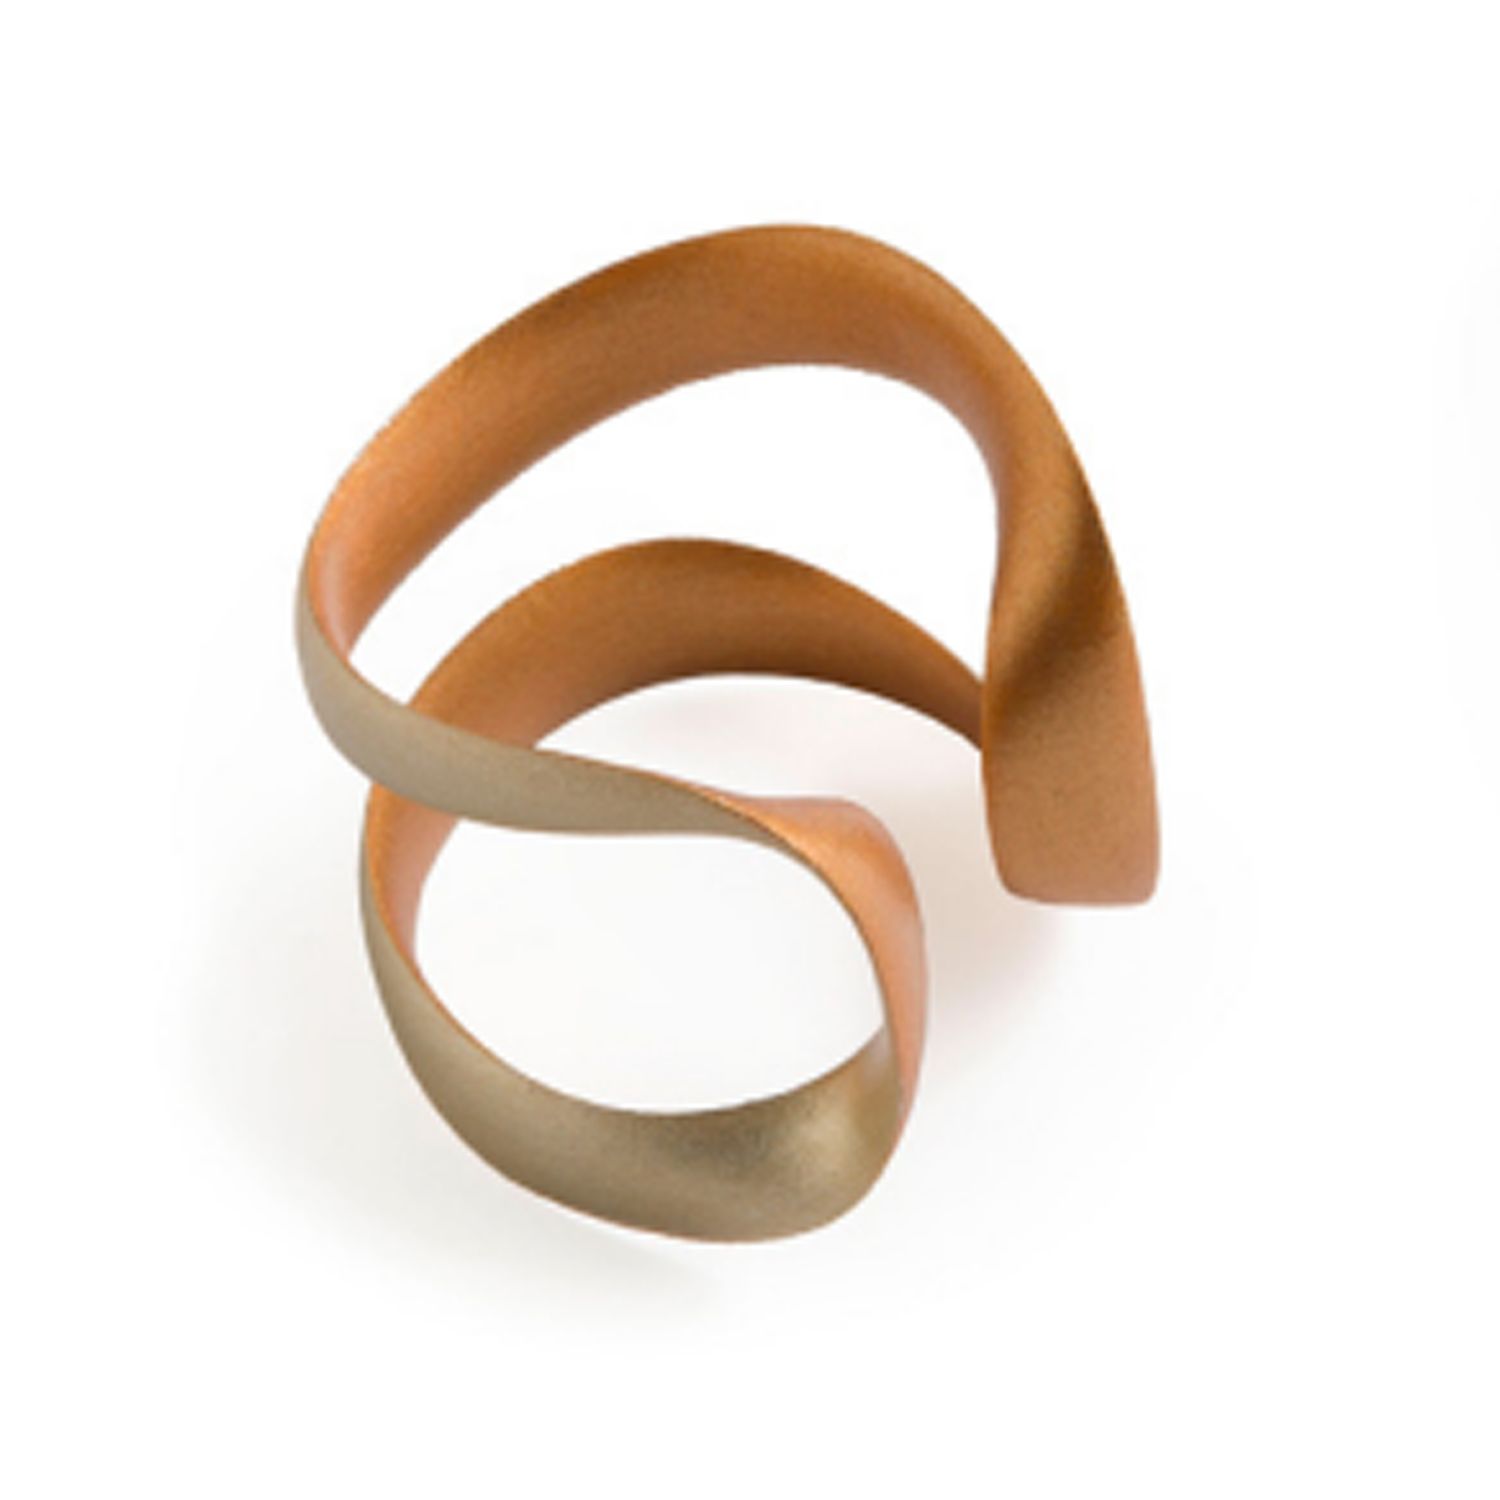 Maison 203: Flow Bracelet Rose Gold Silver Product Image 1 of 1